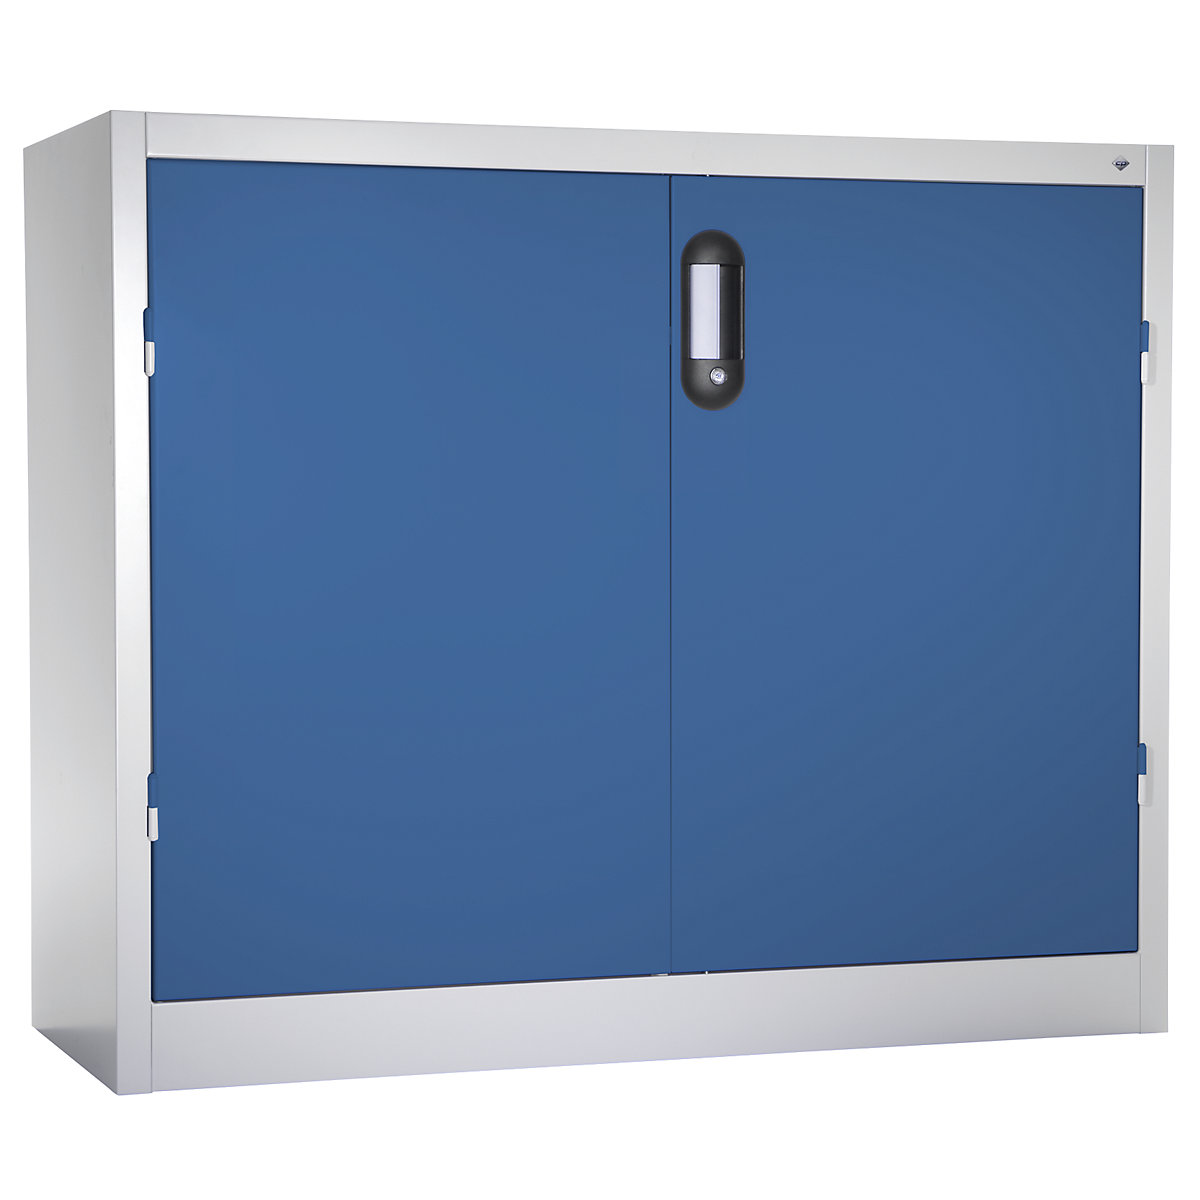 Veliki ormar – C+P, VxŠ 1000 x 1200 mm, dvobojna izvedba, dubina 400 mm, vrata u encijan plavoj boji-9